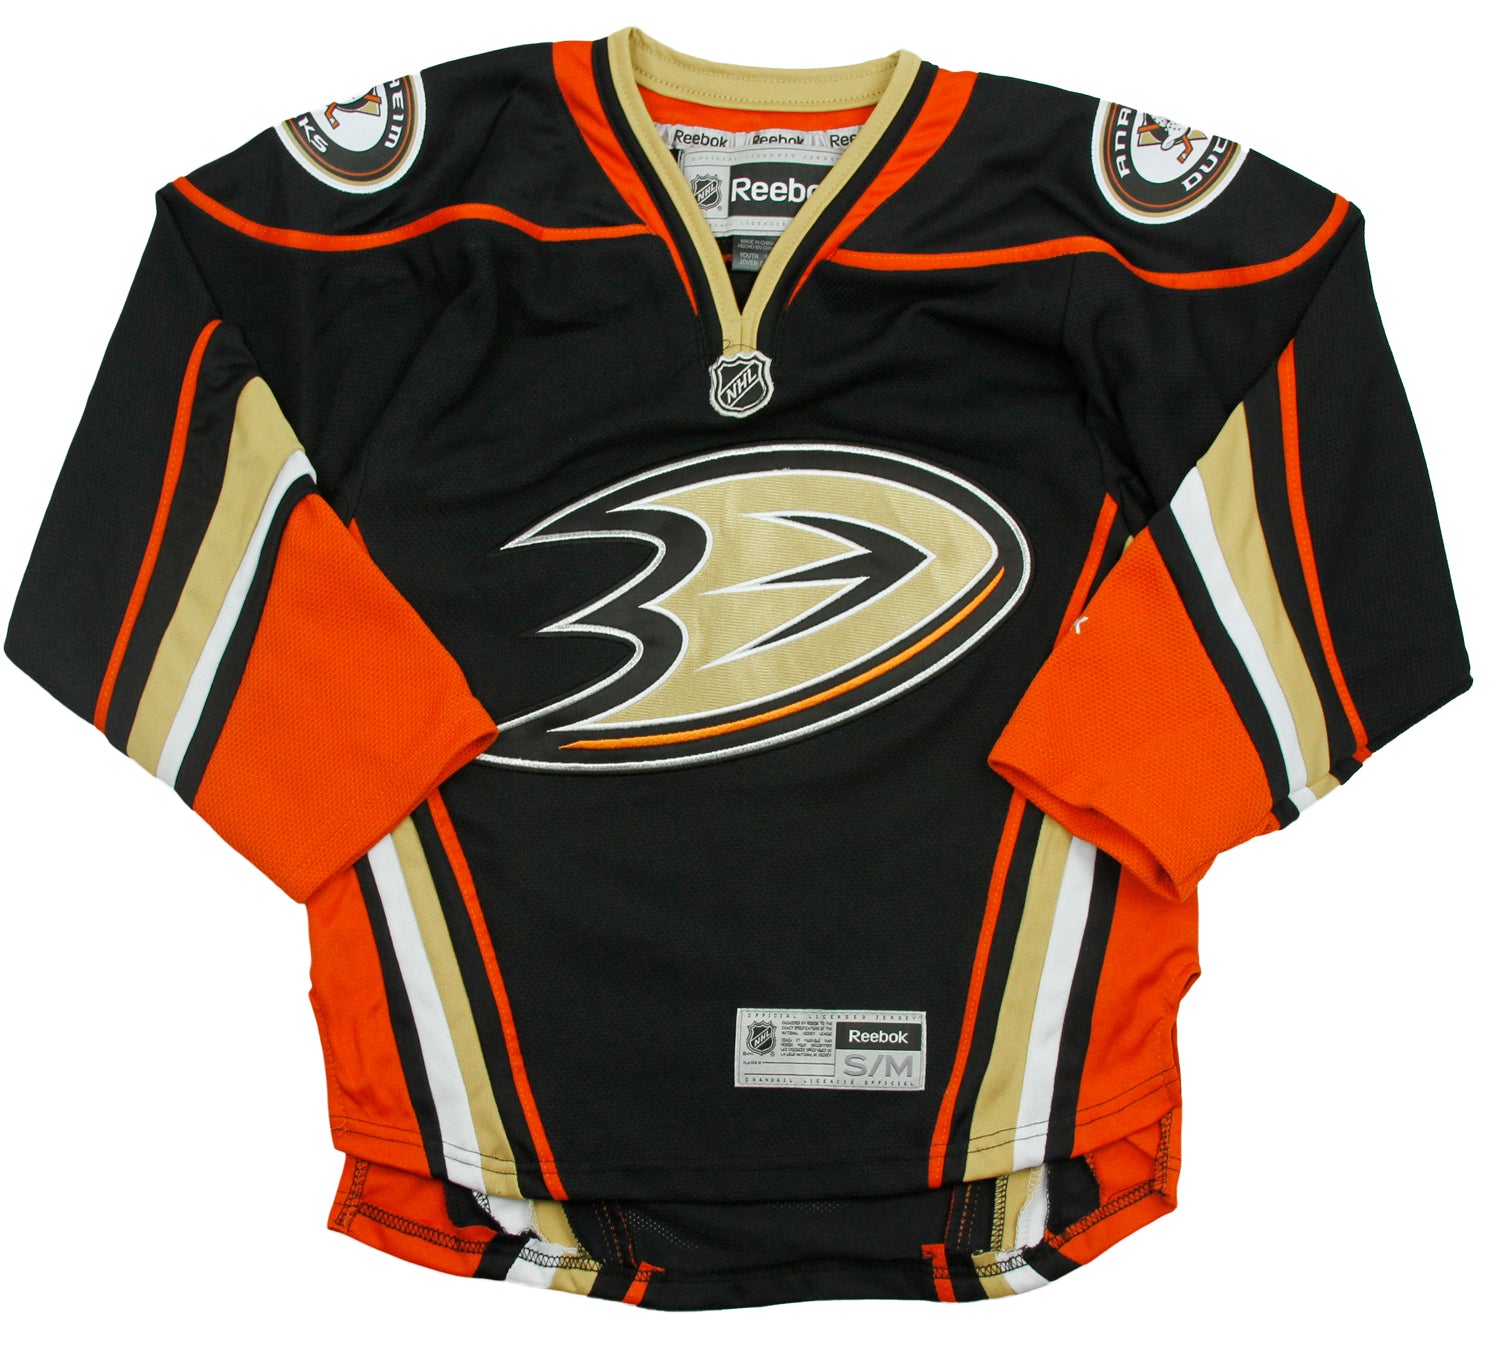 Ducks Orange Hockey Jersey